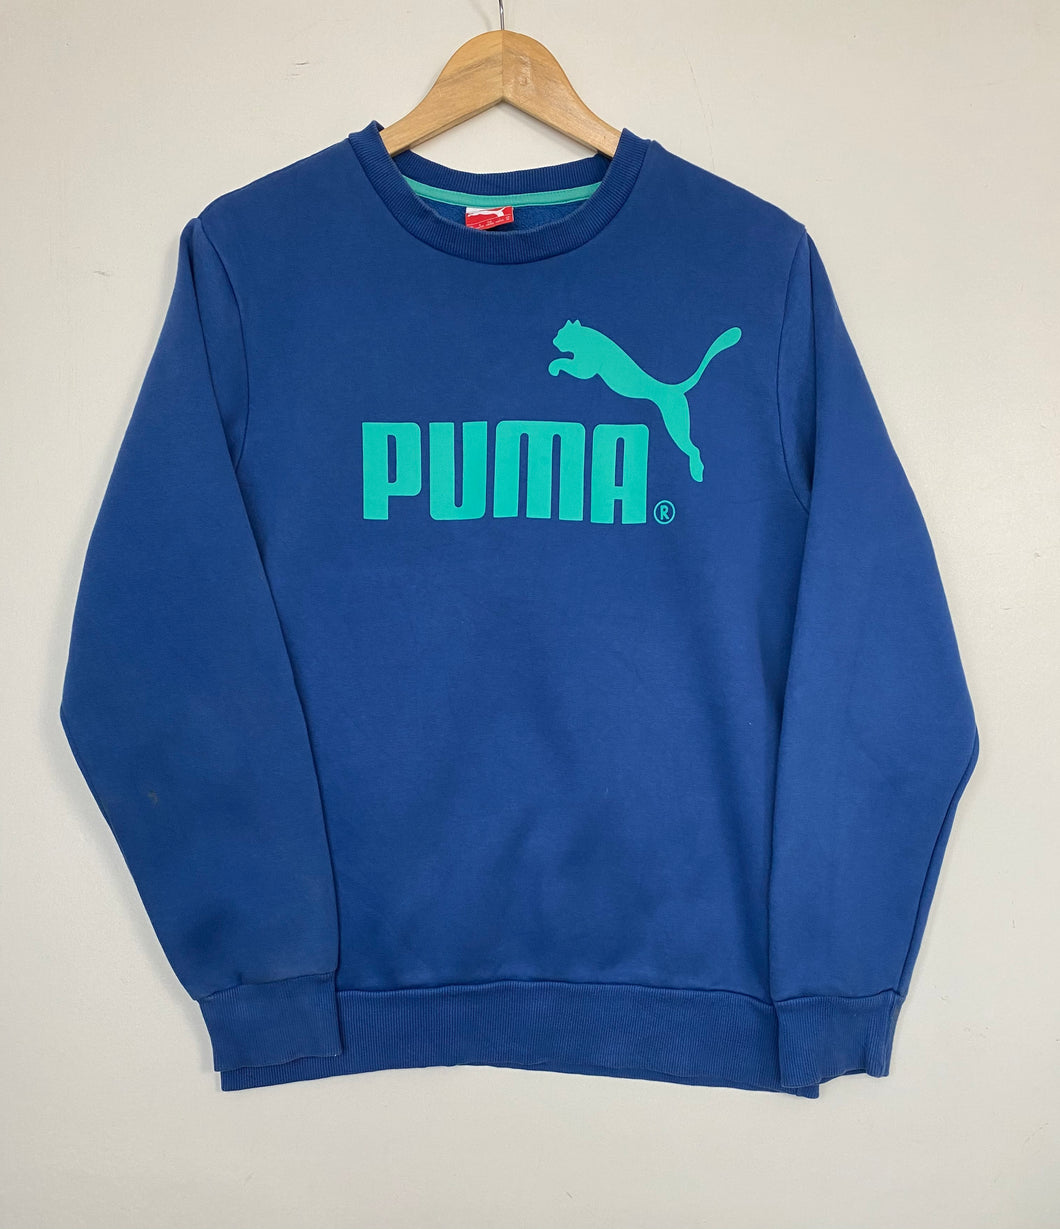 Puma sweatshirt (M)